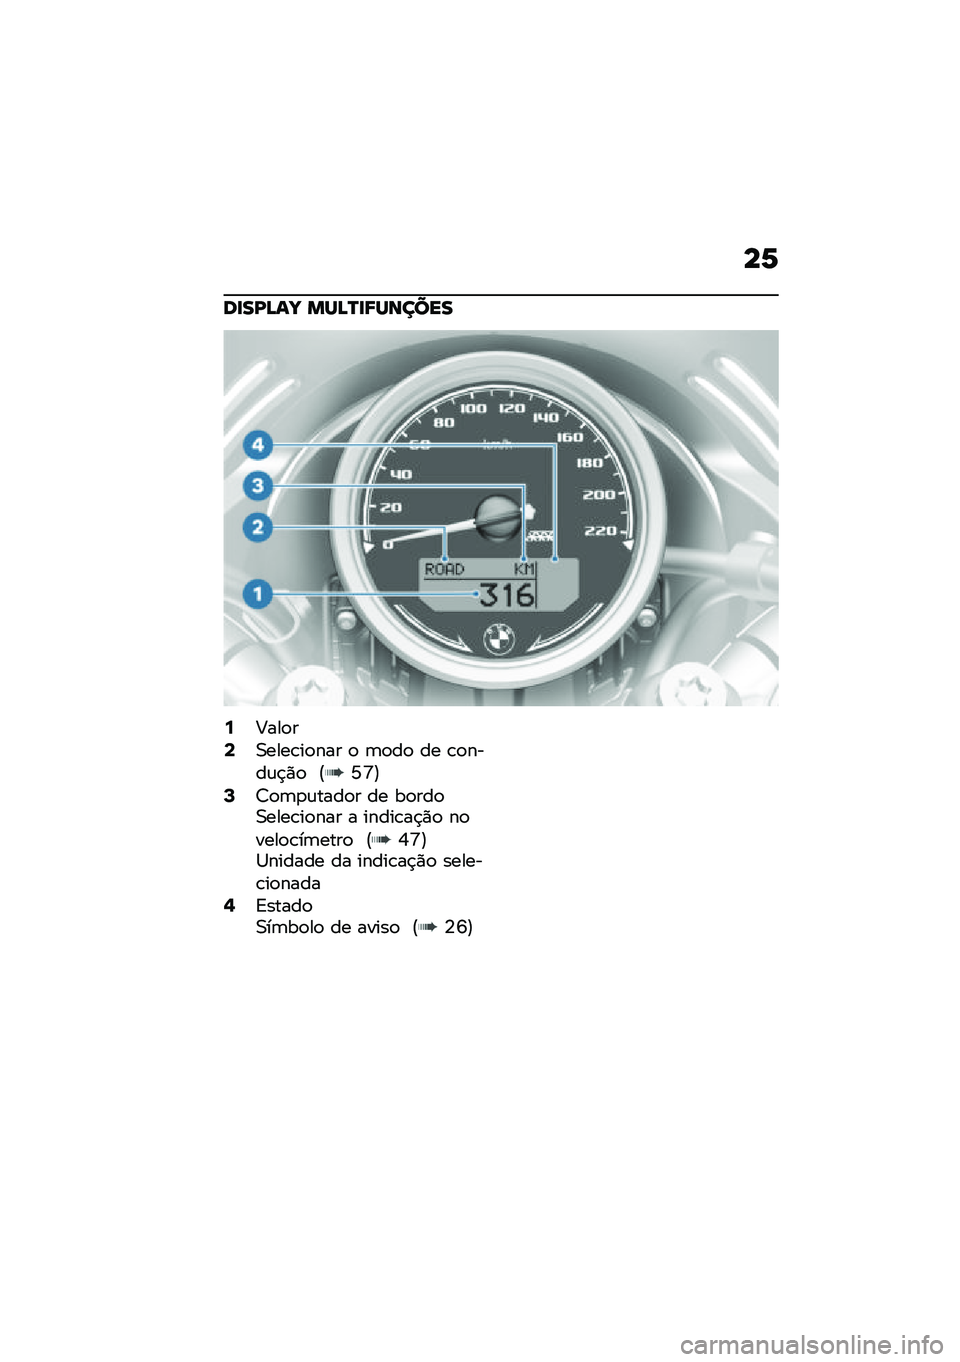 BMW MOTORRAD R NINE T URVAN G/S 2020  Manual do condutor (in Portuguese) ��6
��
��D�A��b ���A�N�
�;������
�7�C���
��9�0����\b��
��� �
 �	�
��
 �� �\b�
����\f�$�)�
 �?�V�S�@�;�7�
�	�
�\f����
� �� ��
���
�0����\b��
��� � �����